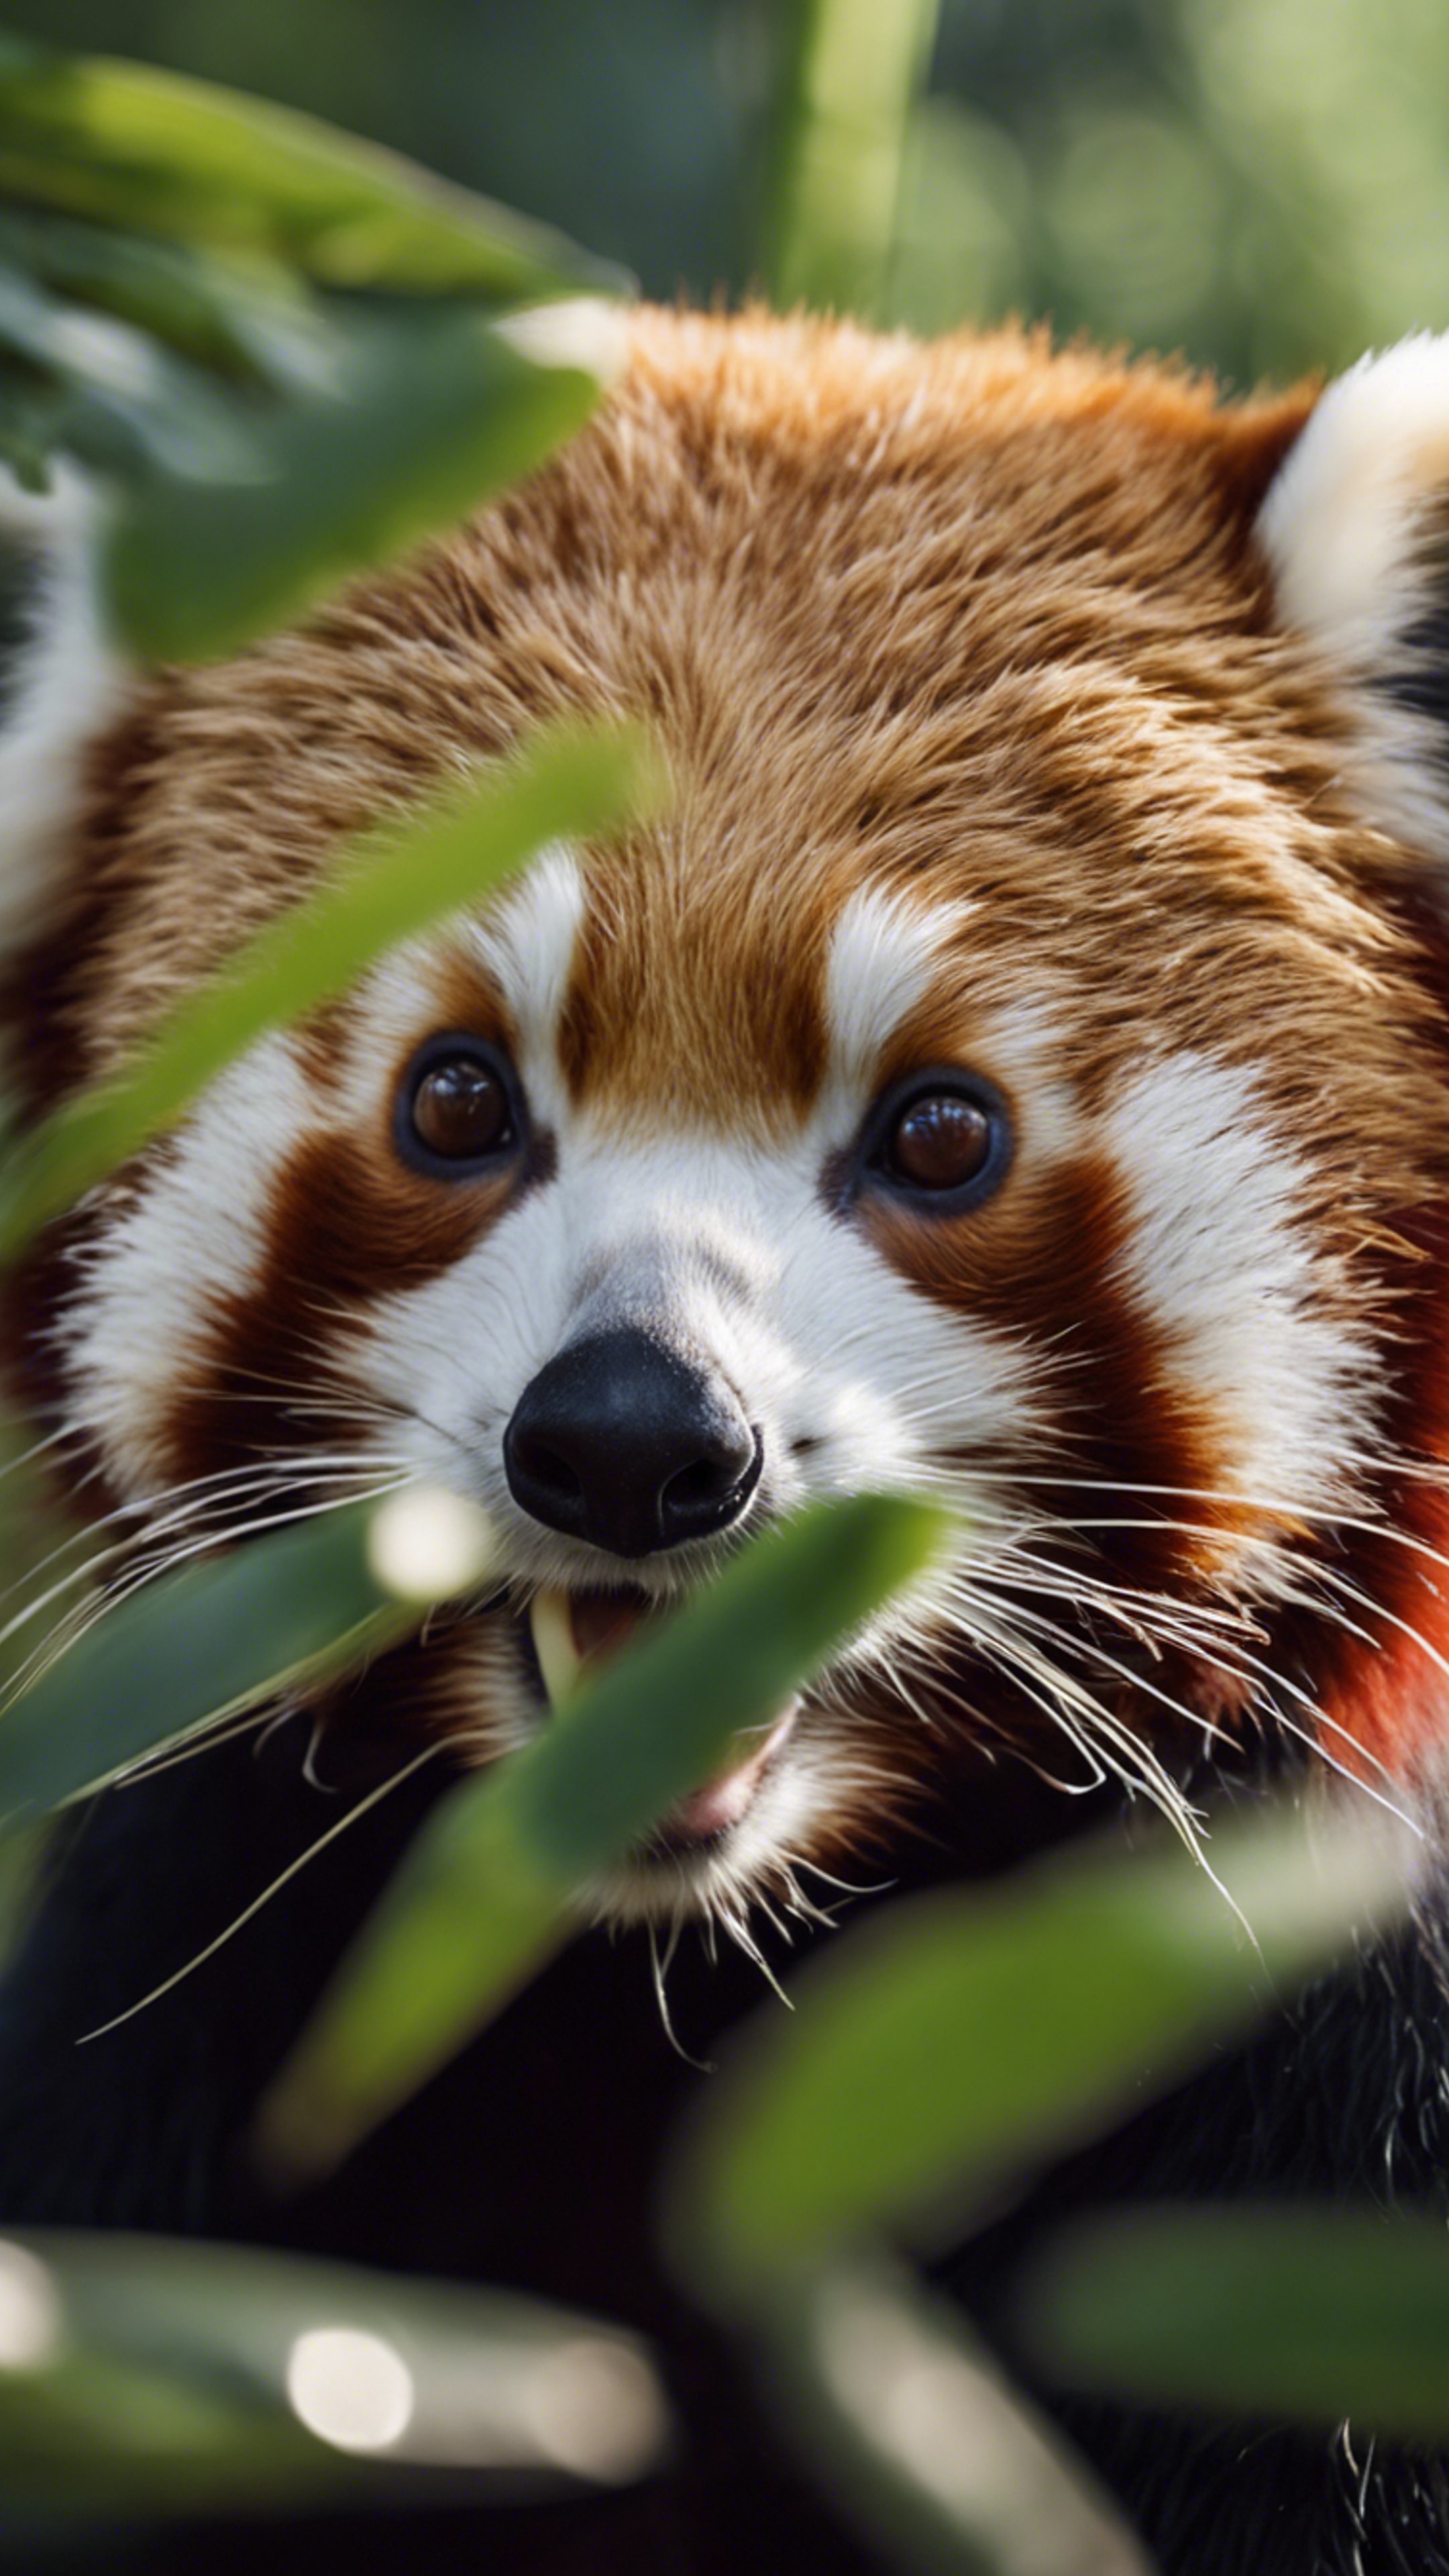 A close-up of a red panda munching on bamboo leaves Дэлгэцийн зураг[20c4a1c4fccc4fa88325]